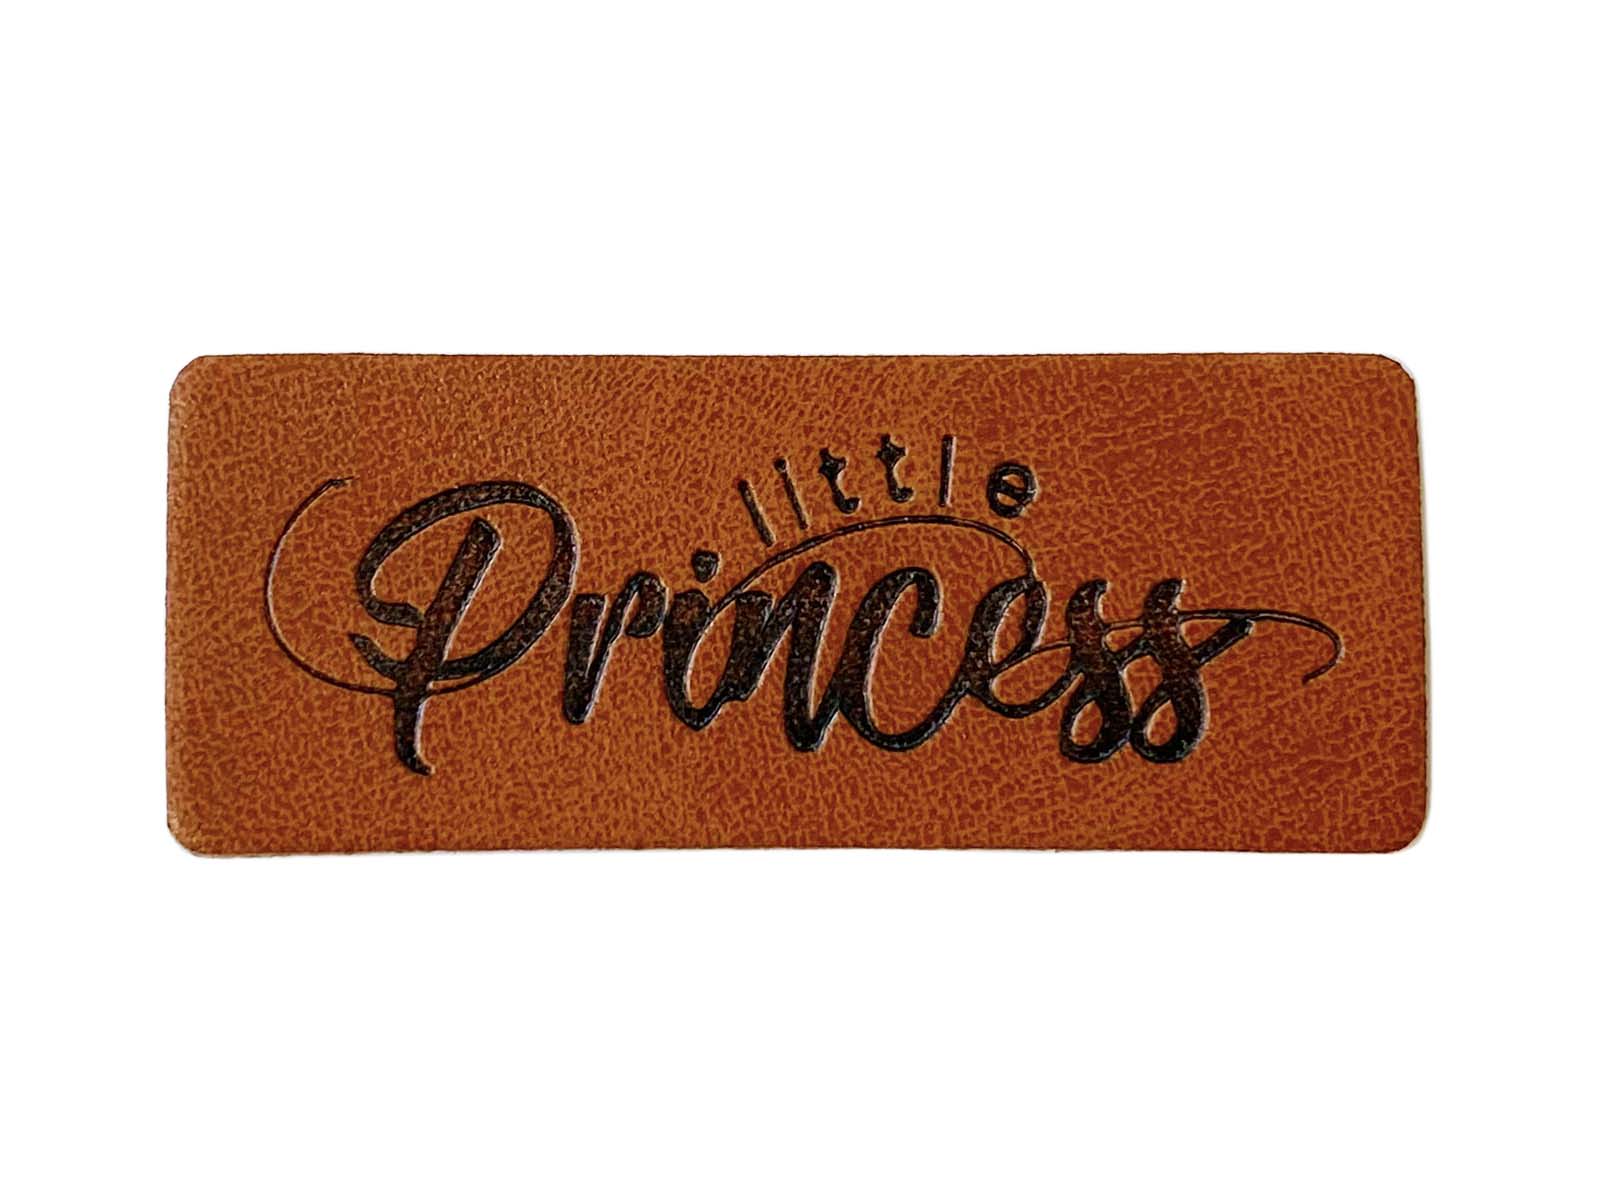 Label aus Kunstleder - "Little Princess" in braun